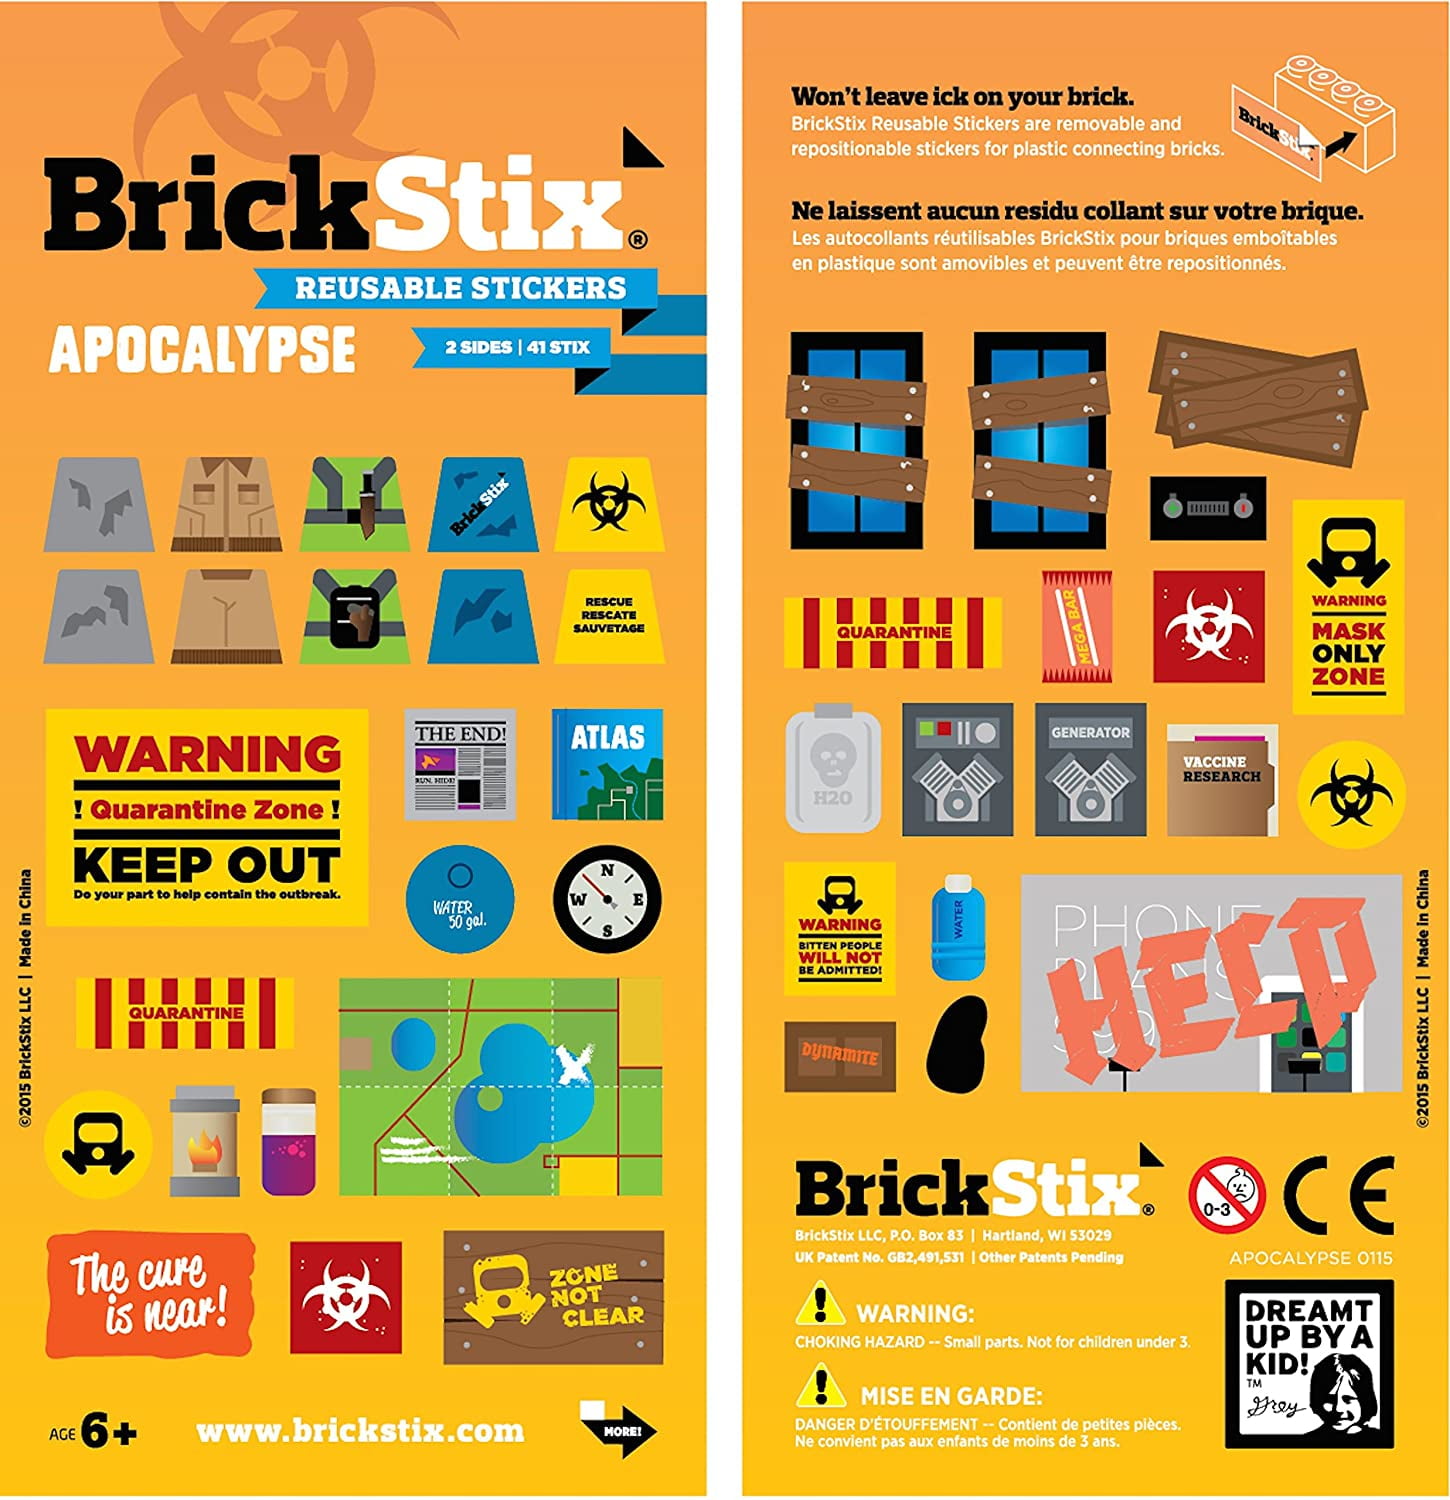 *NEW* Building Brick BRICKSTIX Reusable Stickers *APOCALYPSE* 